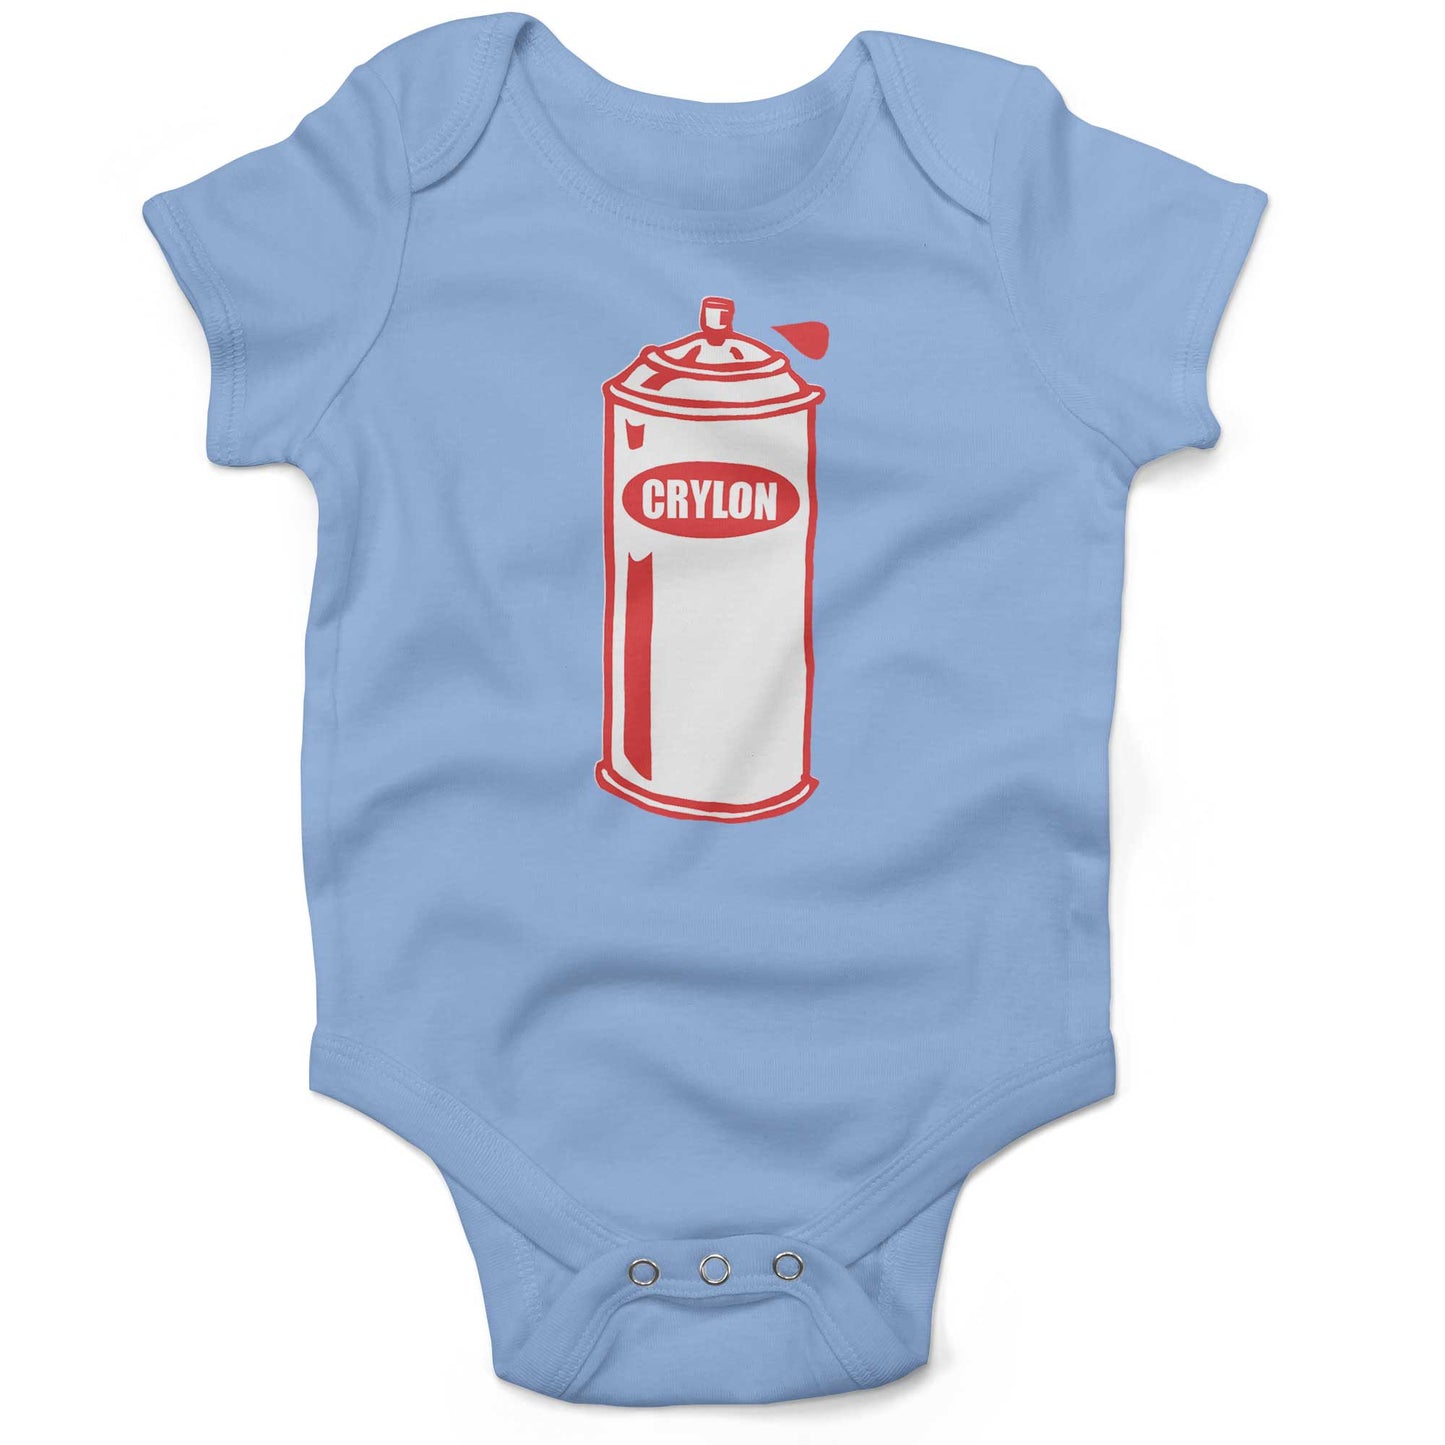 Crylon Cans Infant Bodysuit or Raglan Tee-Organic Baby Blue-3-6 months